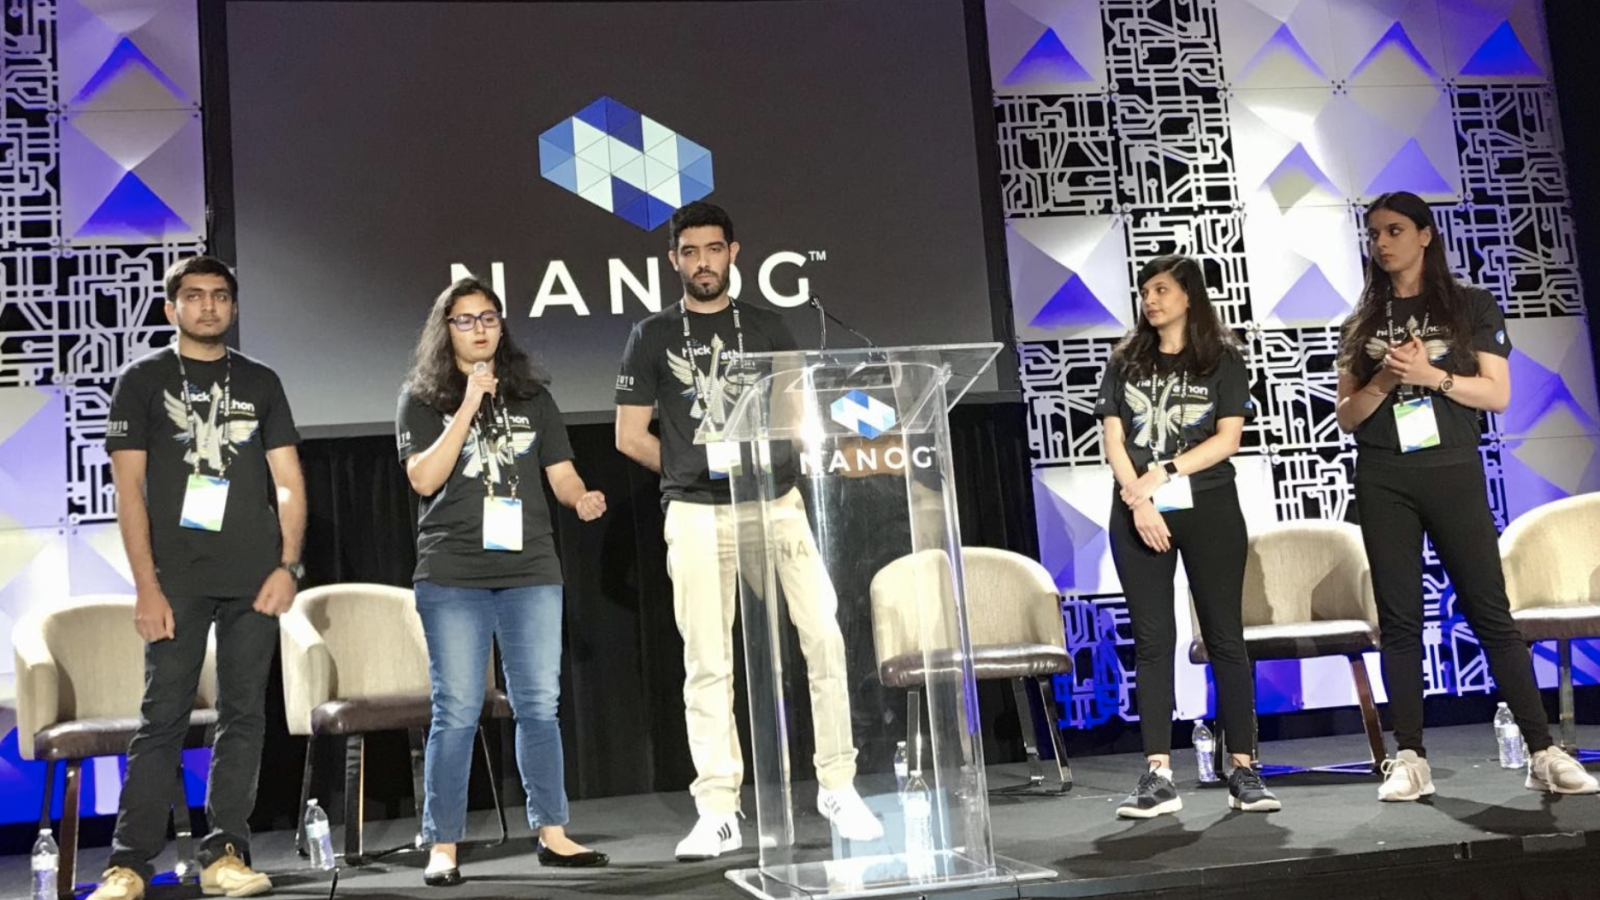 network engineering students presenting at NANOG for winning hackathon